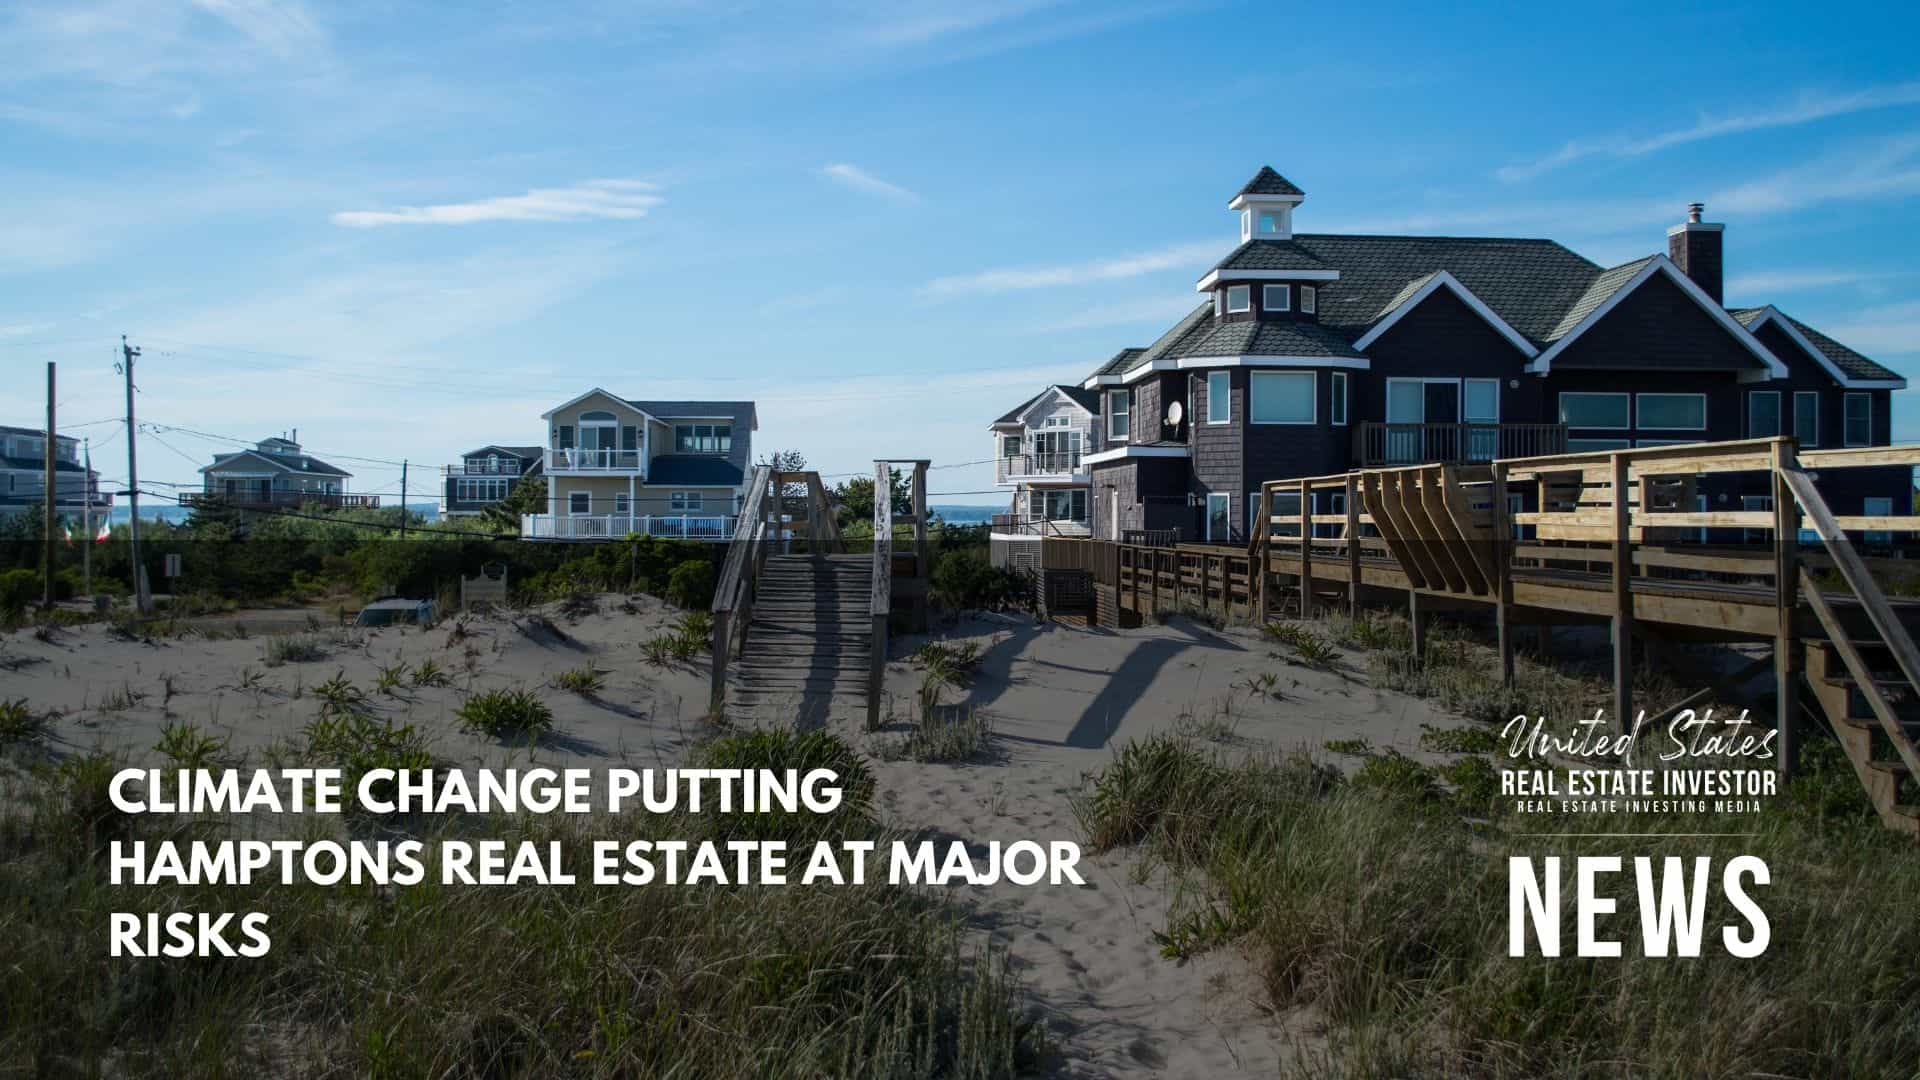 United States Real Estate Investor - Real estate investing media - Climate Change Putting Hamptons Real Estate At Major Risks